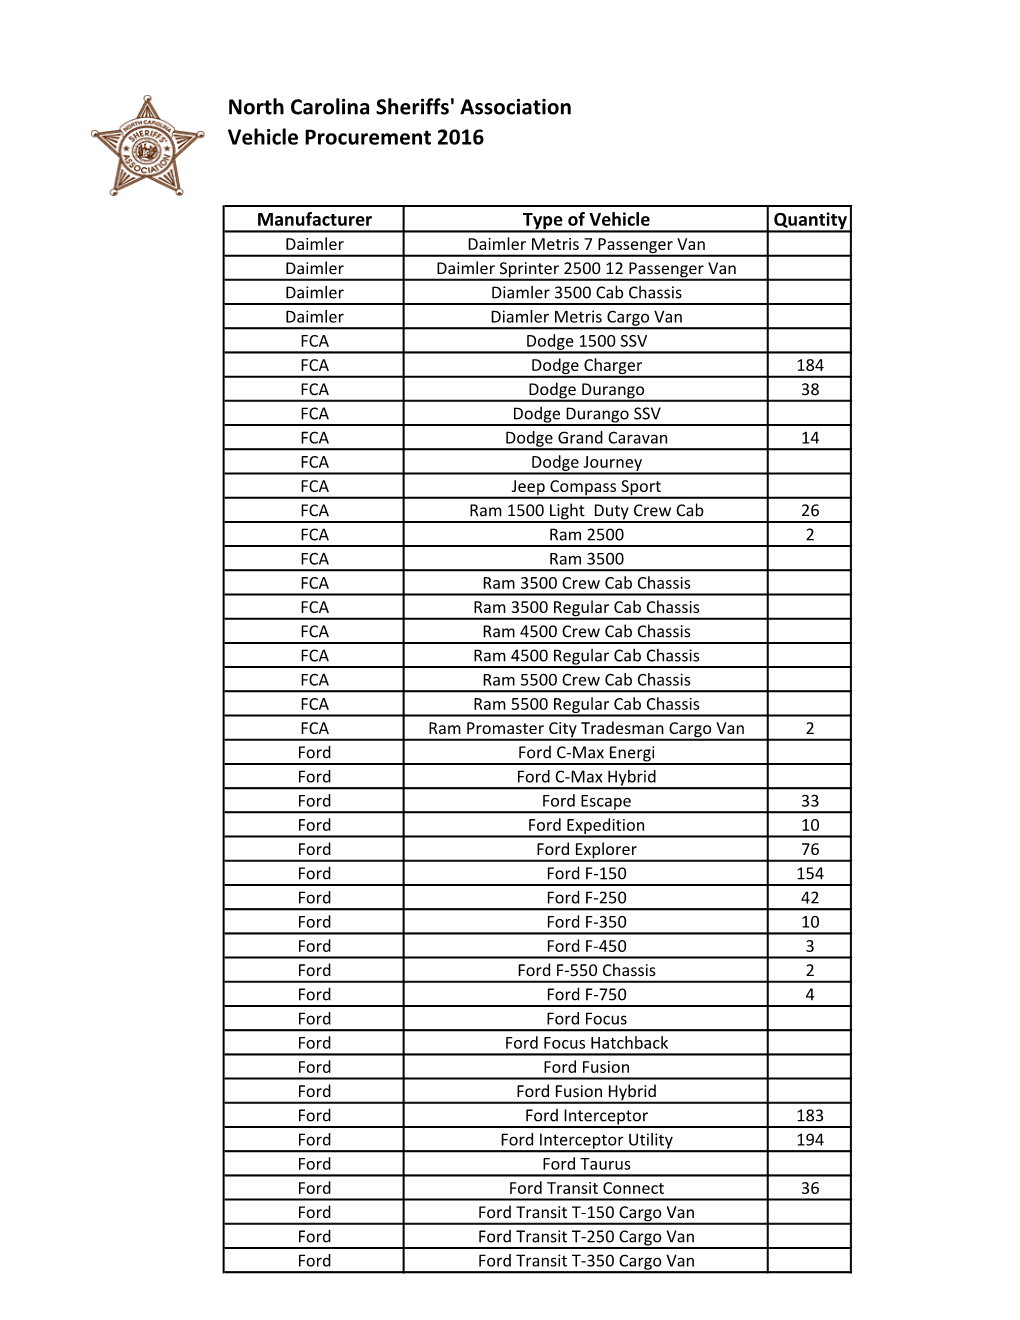 North Carolina Sheriffs' Association Vehicle Procurement 2016